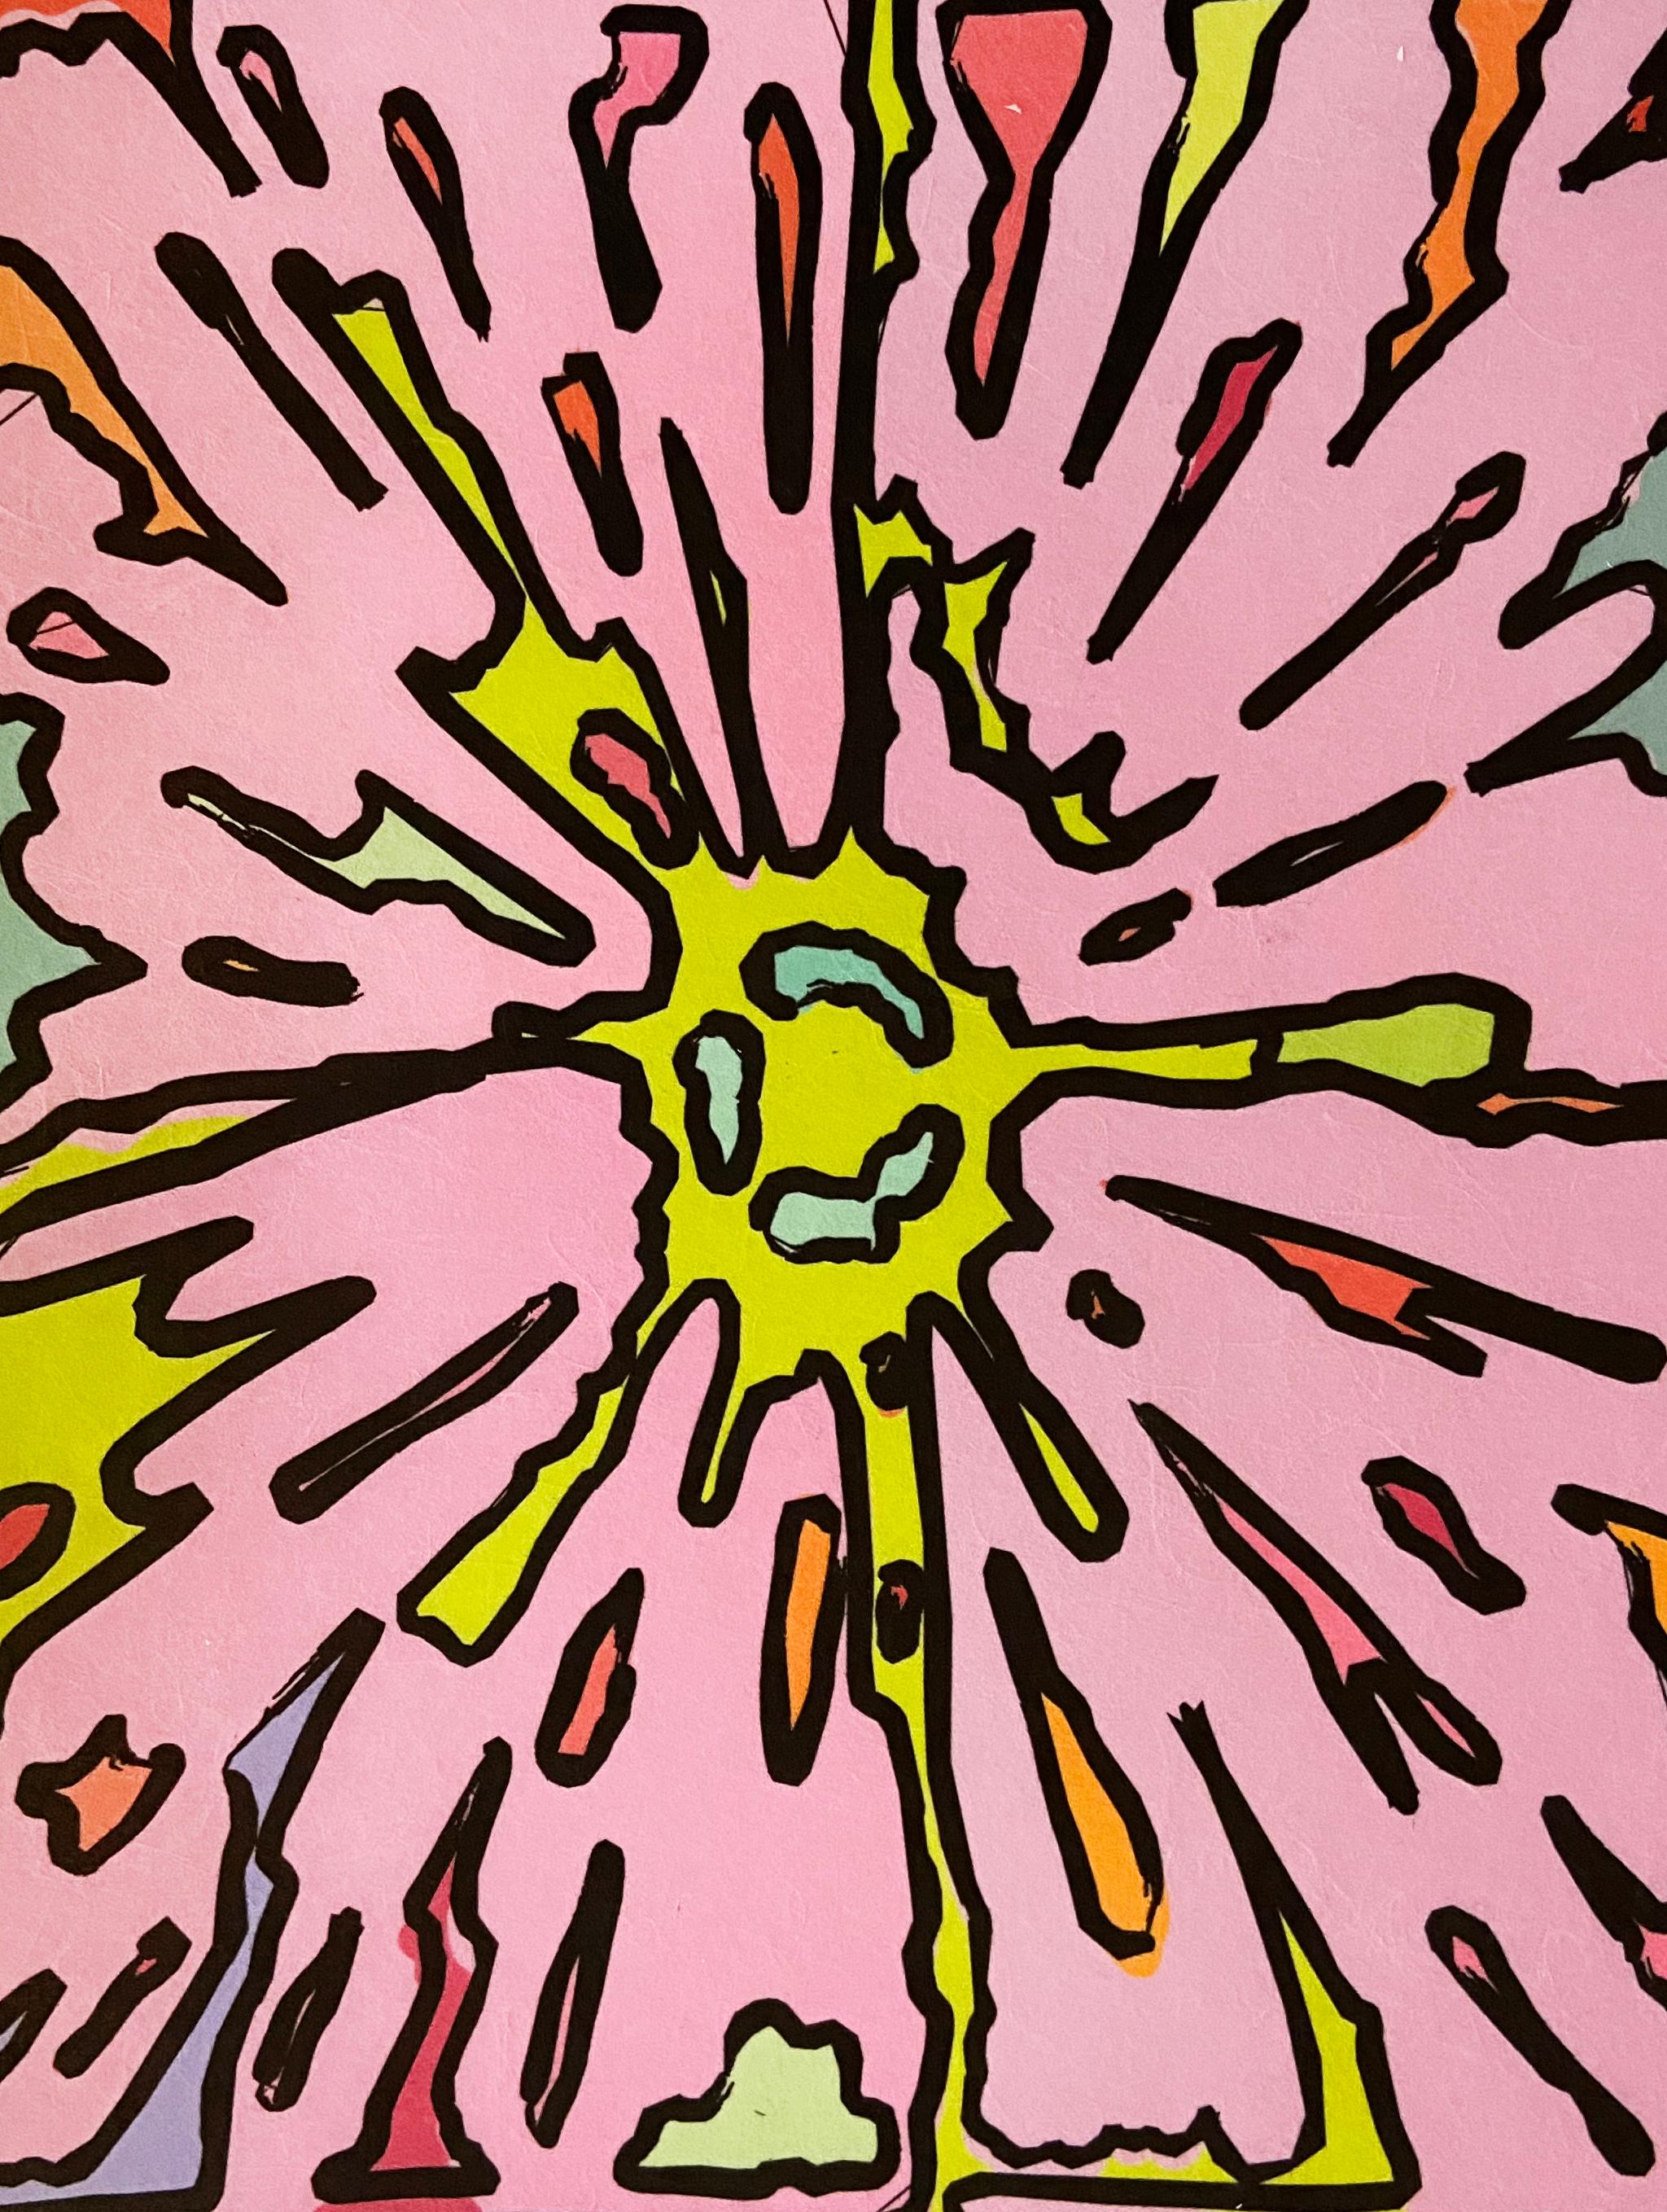 Peter Halley, Cartoon Explosion - Abstract Art, Minimalism, Signed Print 1